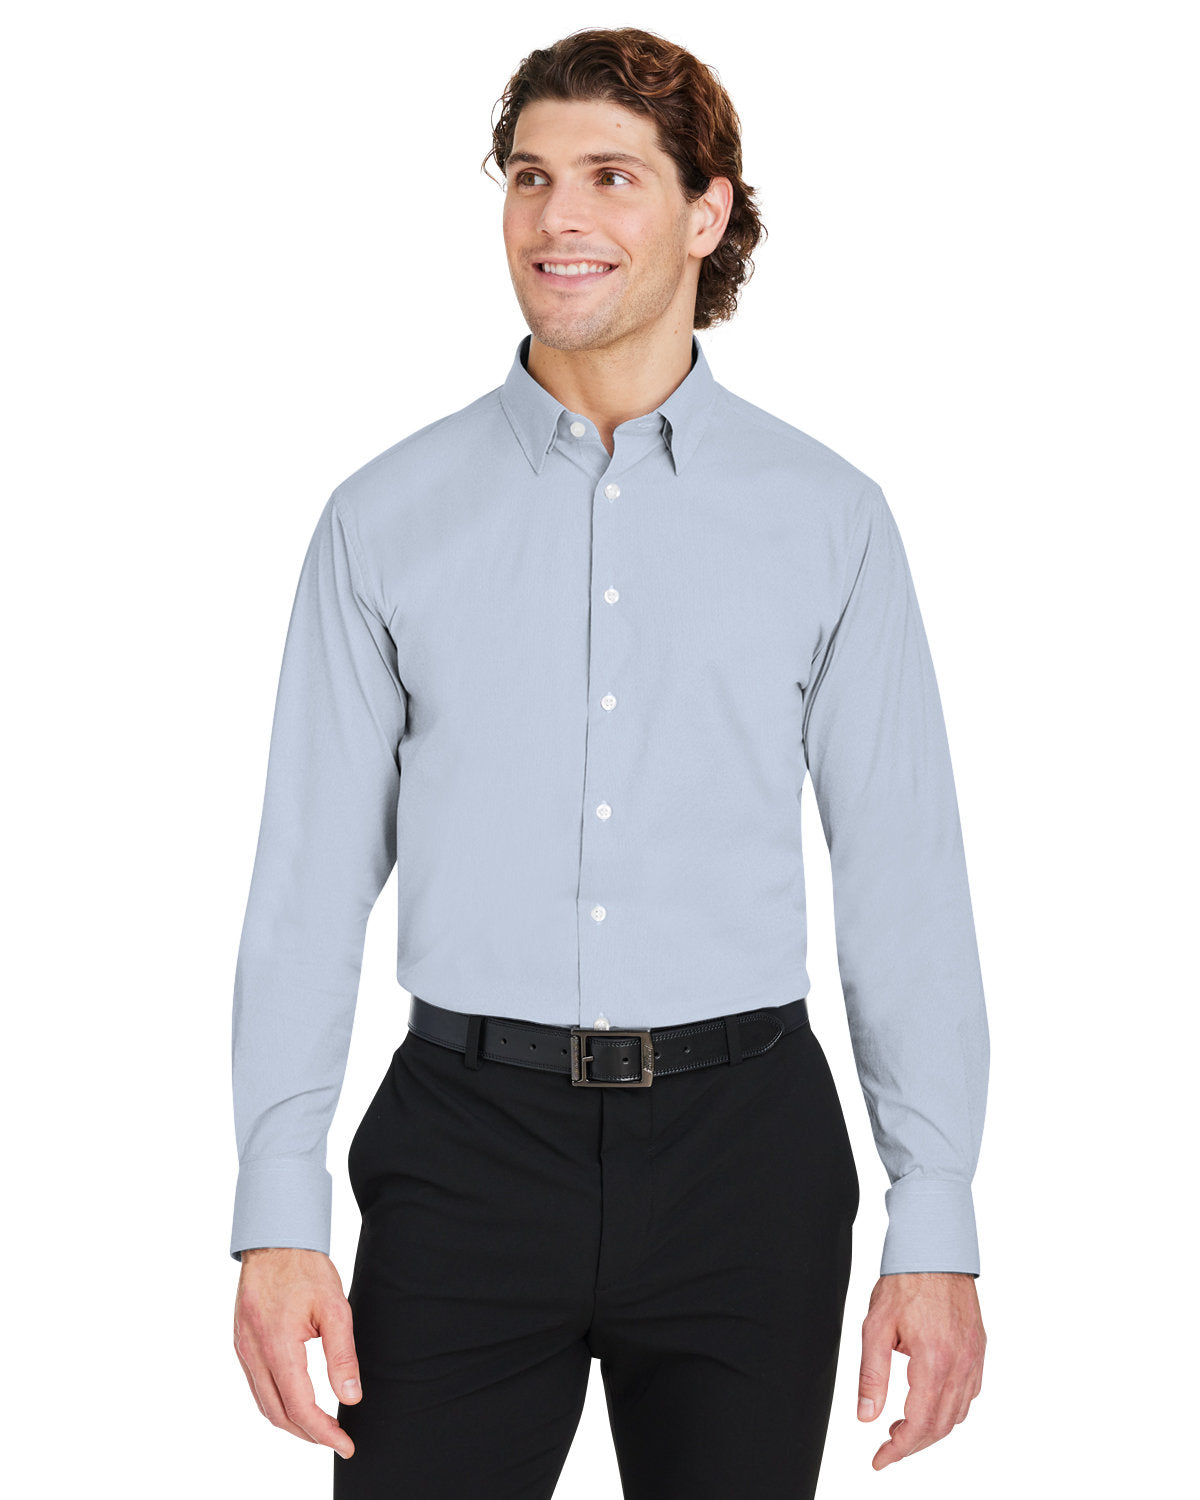 DEVON AND JONES Crownlux Performance® Men's Microstripe Shirt